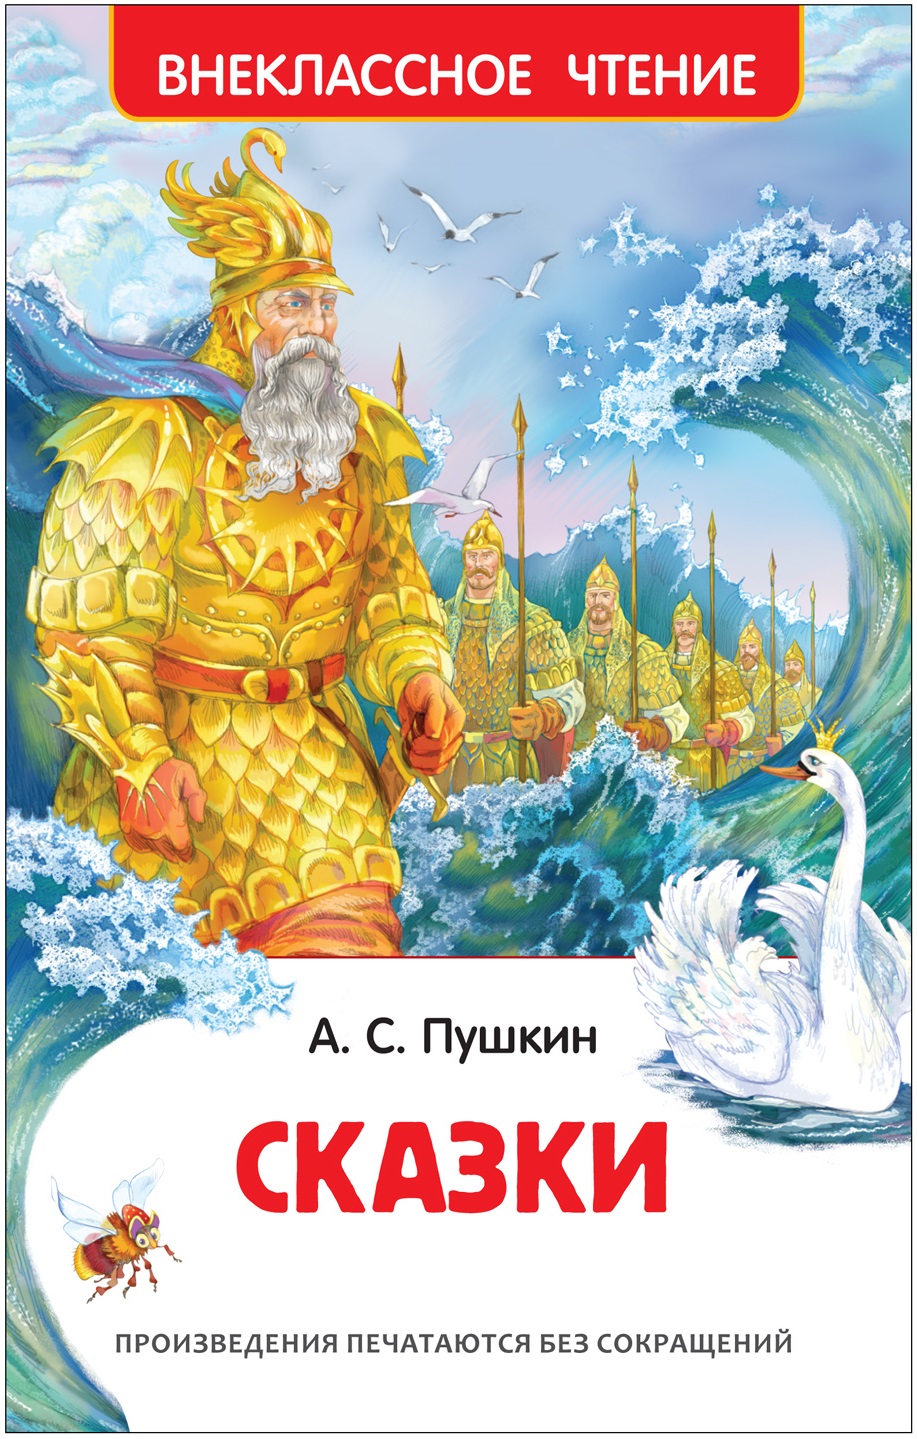 Сказки (Пушкин А.С.)